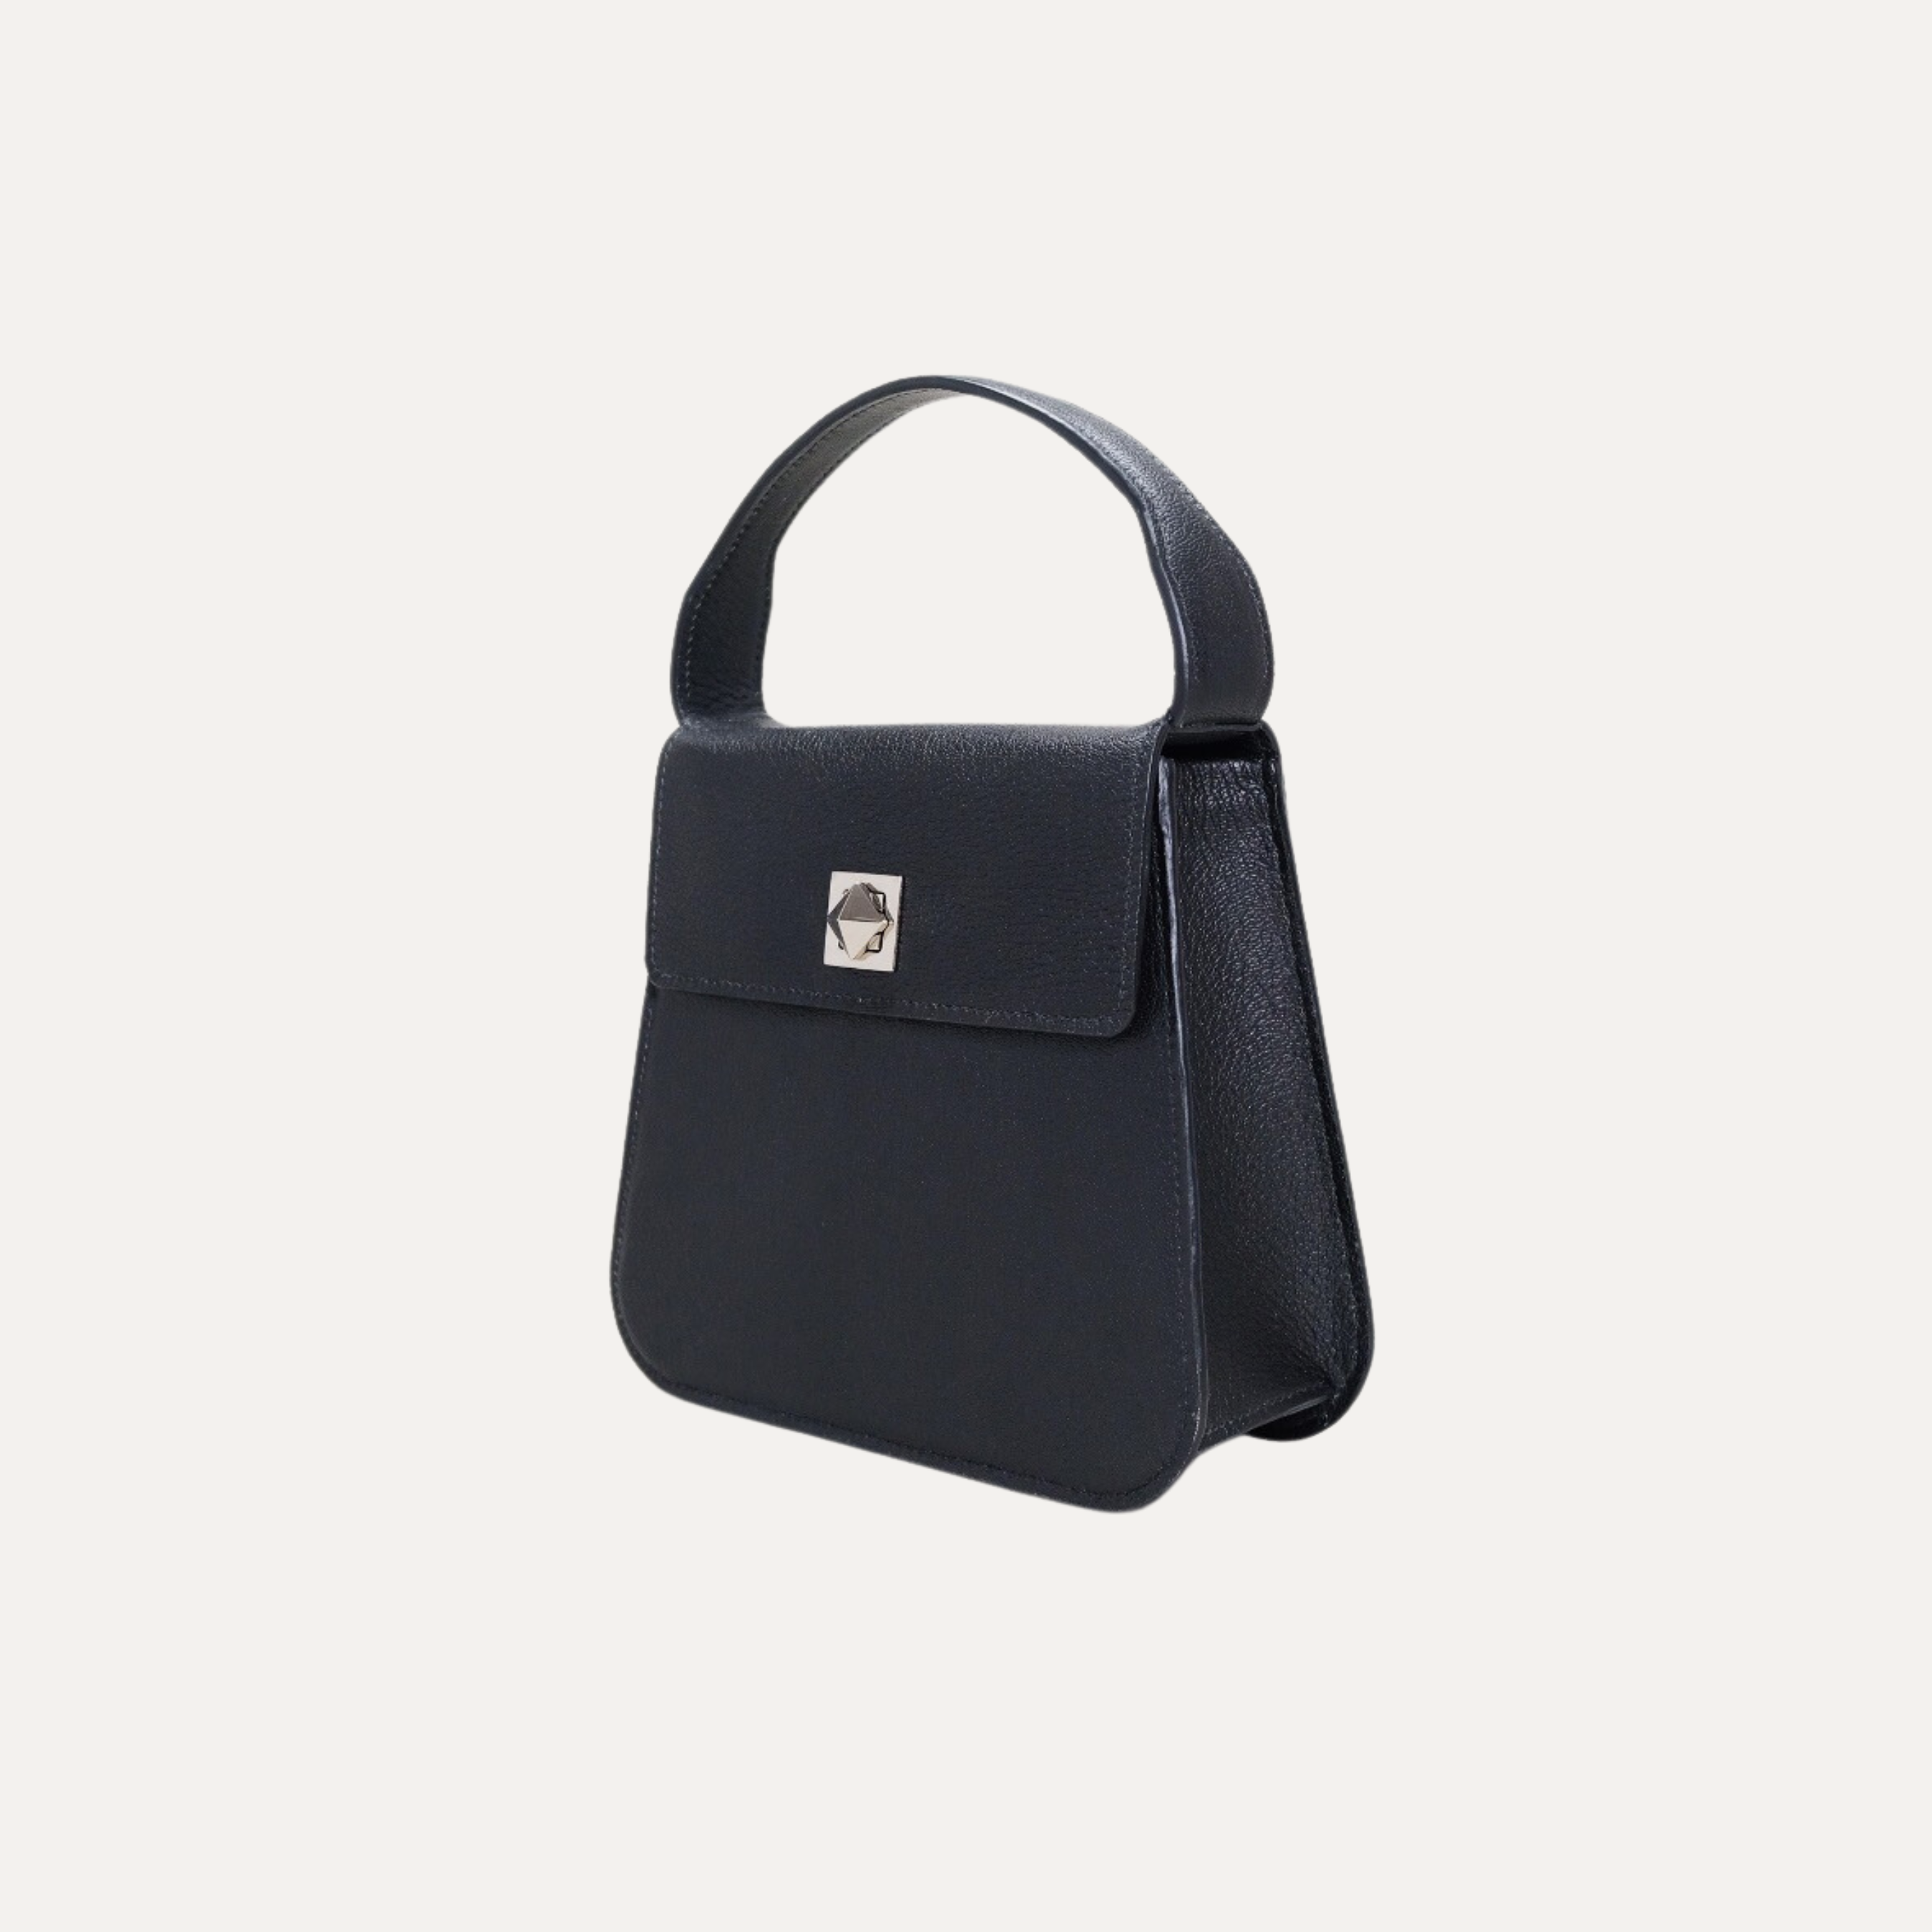 Black leather top-handle luxury handbag made in Australia